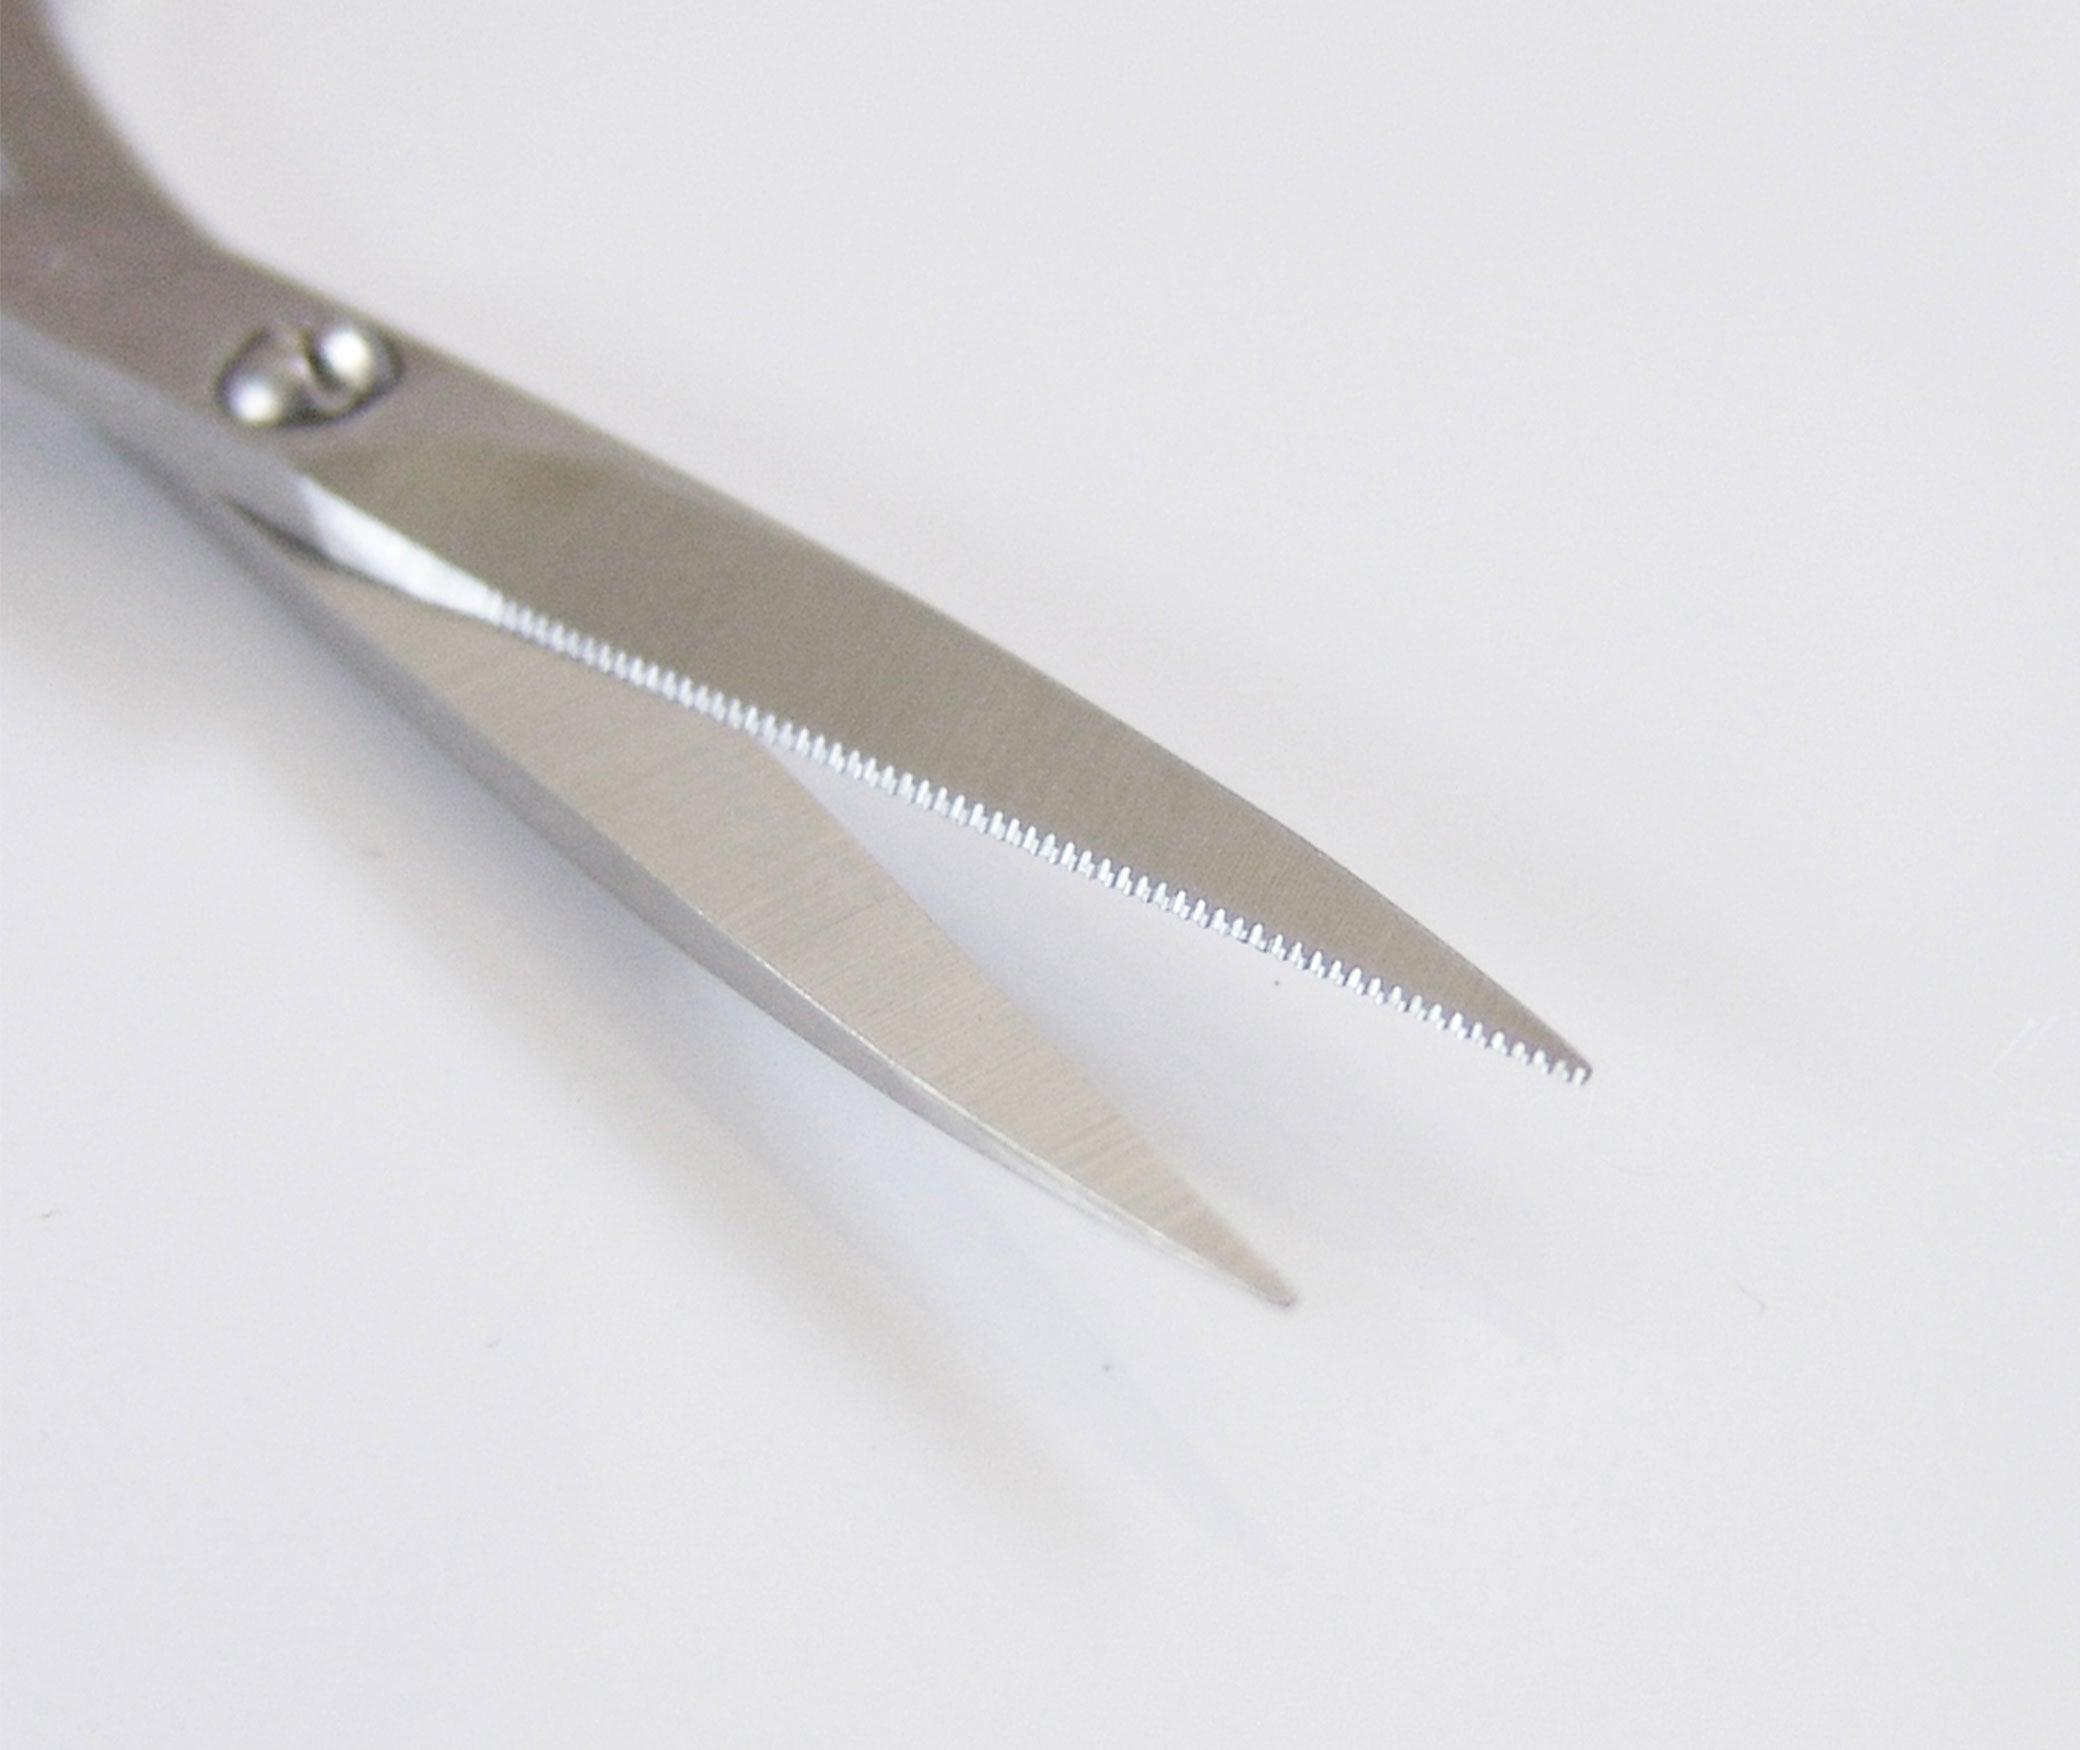 Seki Edge mustache scissors with serrated edge 